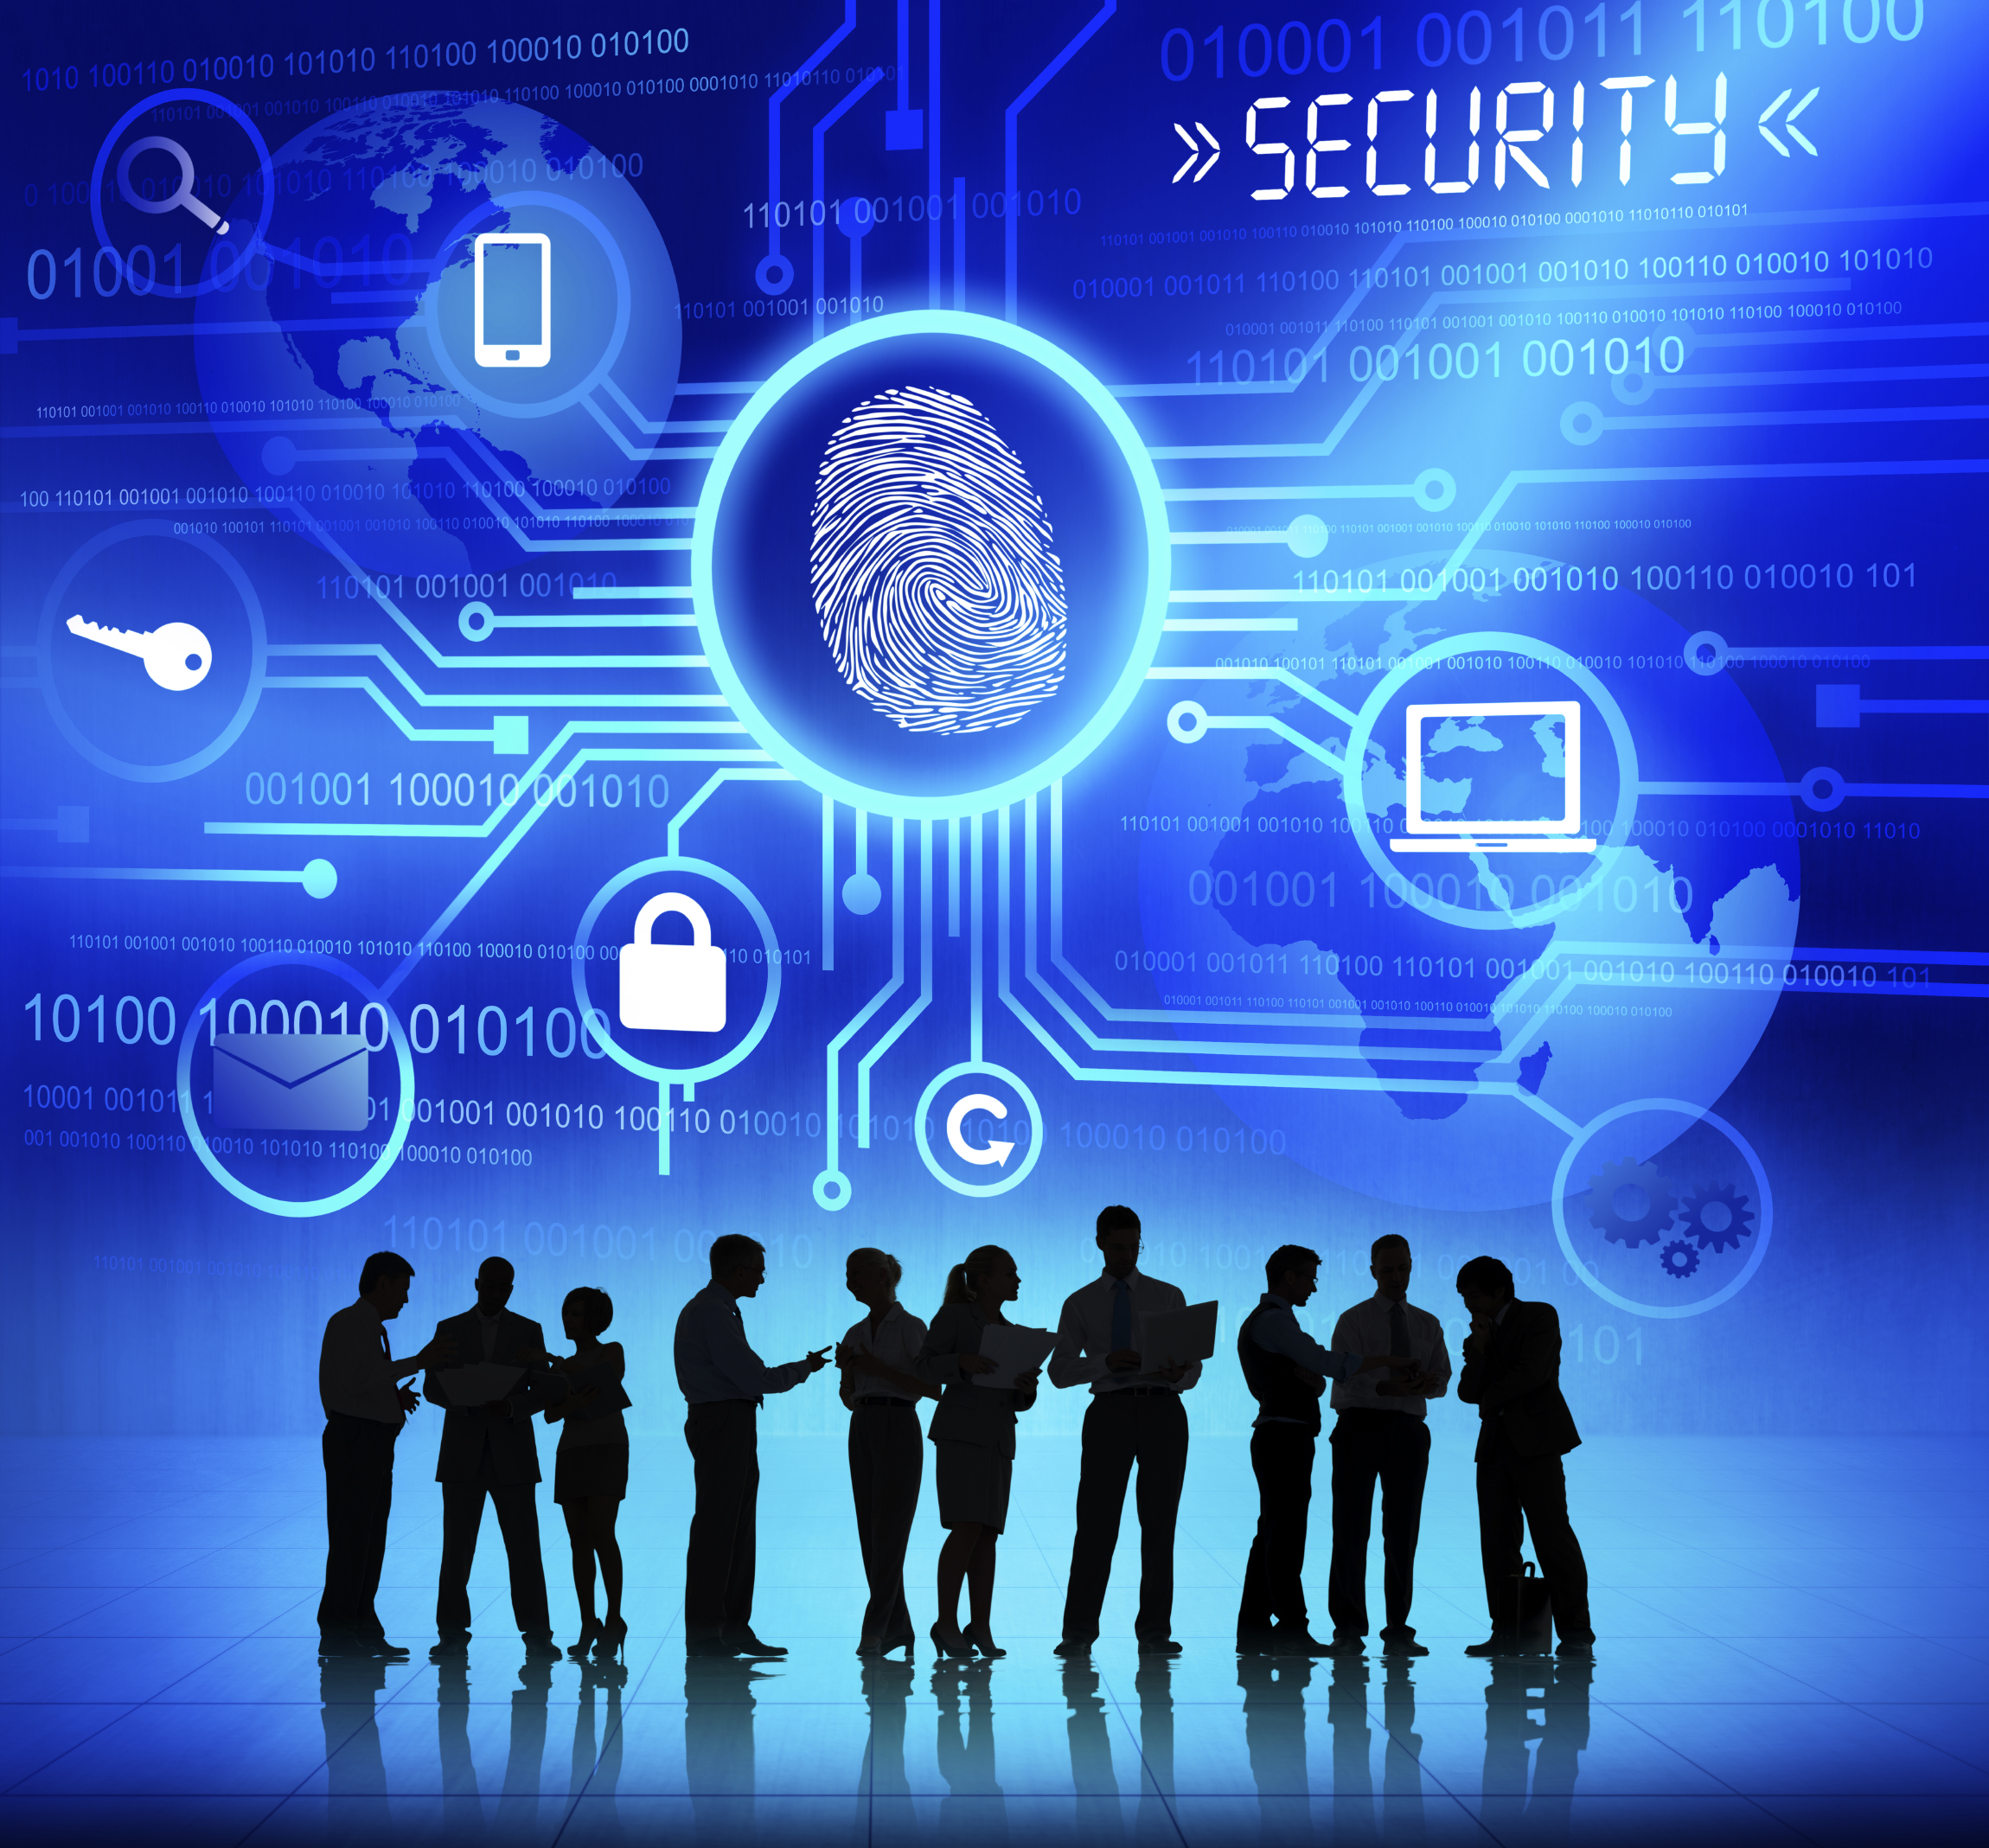 Systemintegrator optimiert digitale Sicherheit